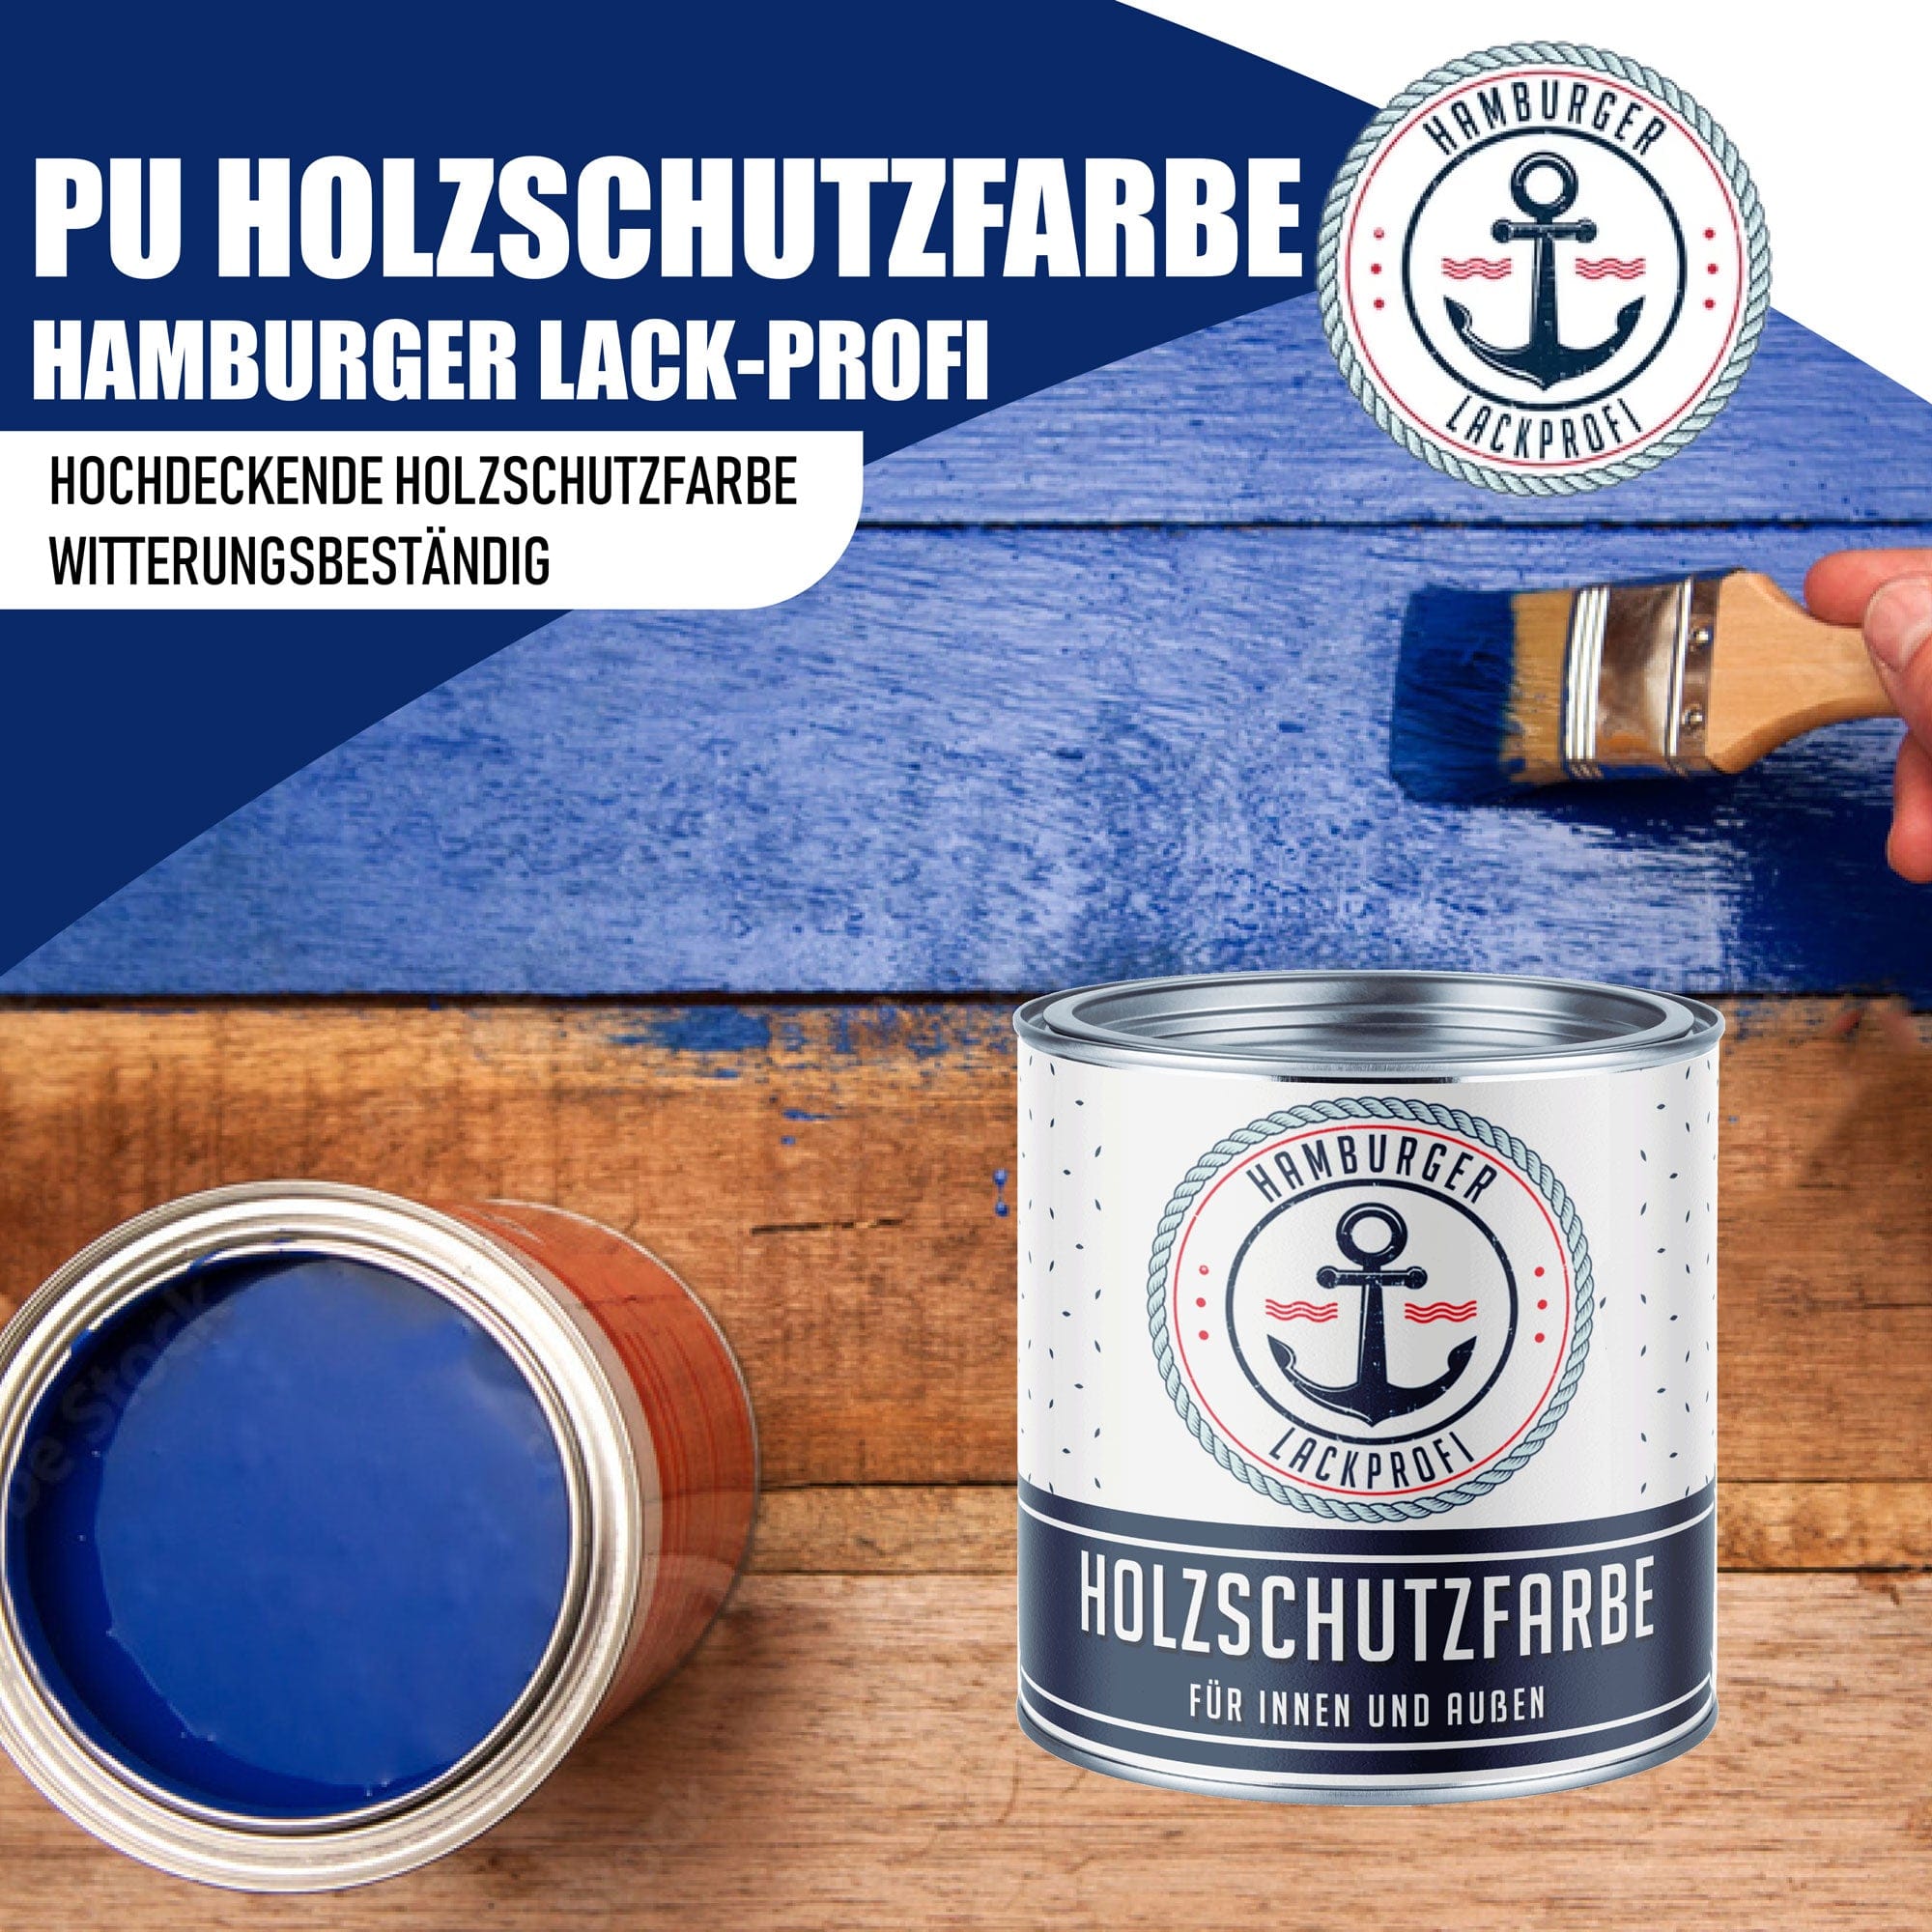 Hamburger Lack-Profi Lacke & Beschichtungen Hamburger Lack-Profi PU Holzschutzfarbe - hochdeckende Wetterschutzfarbe